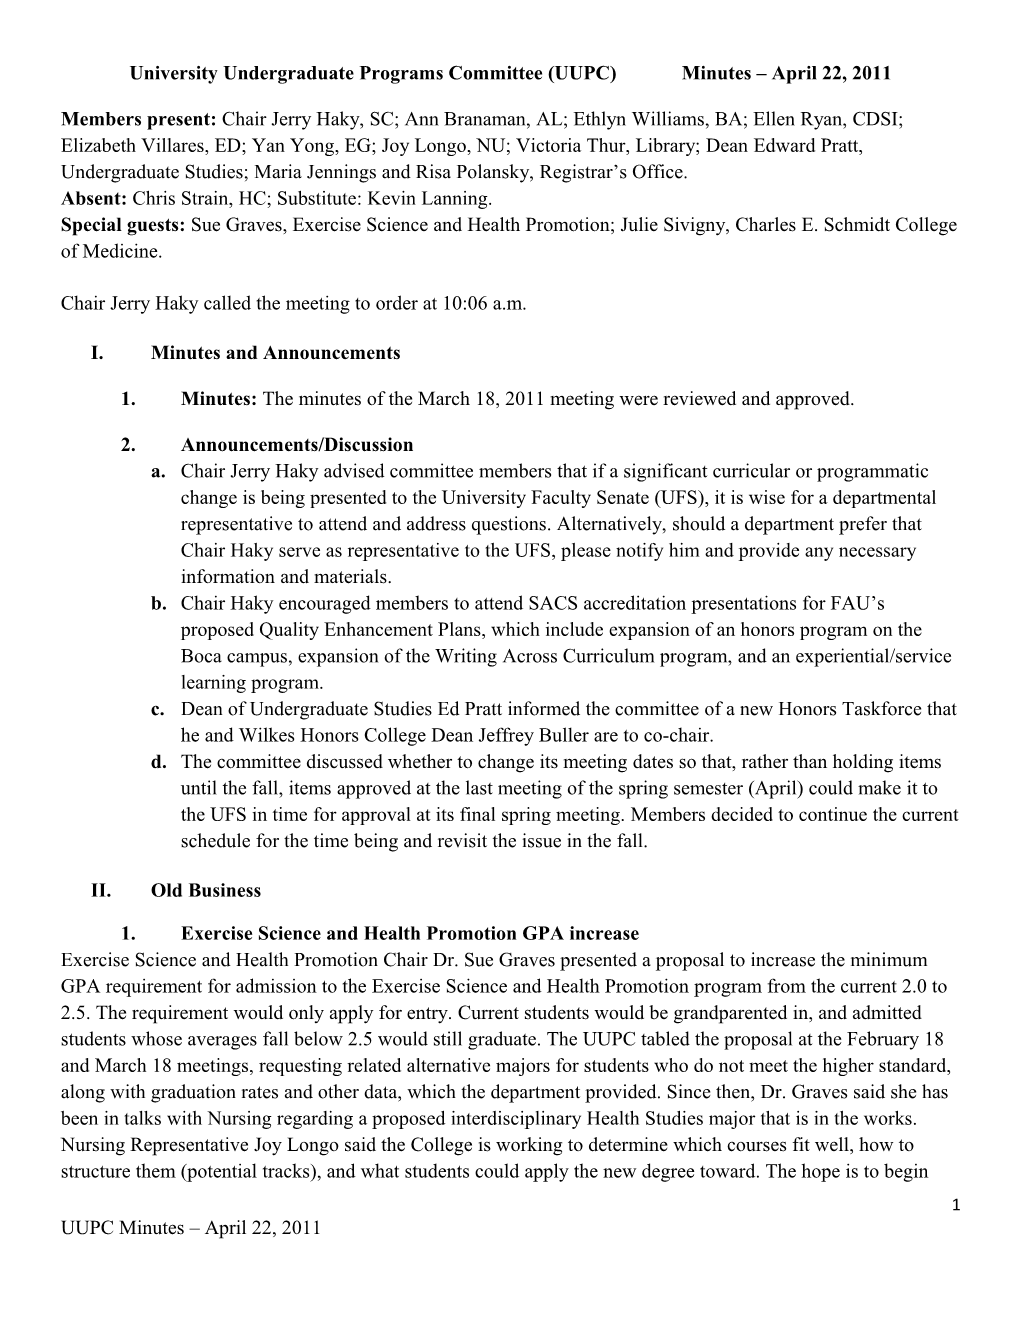 University Undergraduate Programs Committee (UUPC) Minutes April 22, 2011